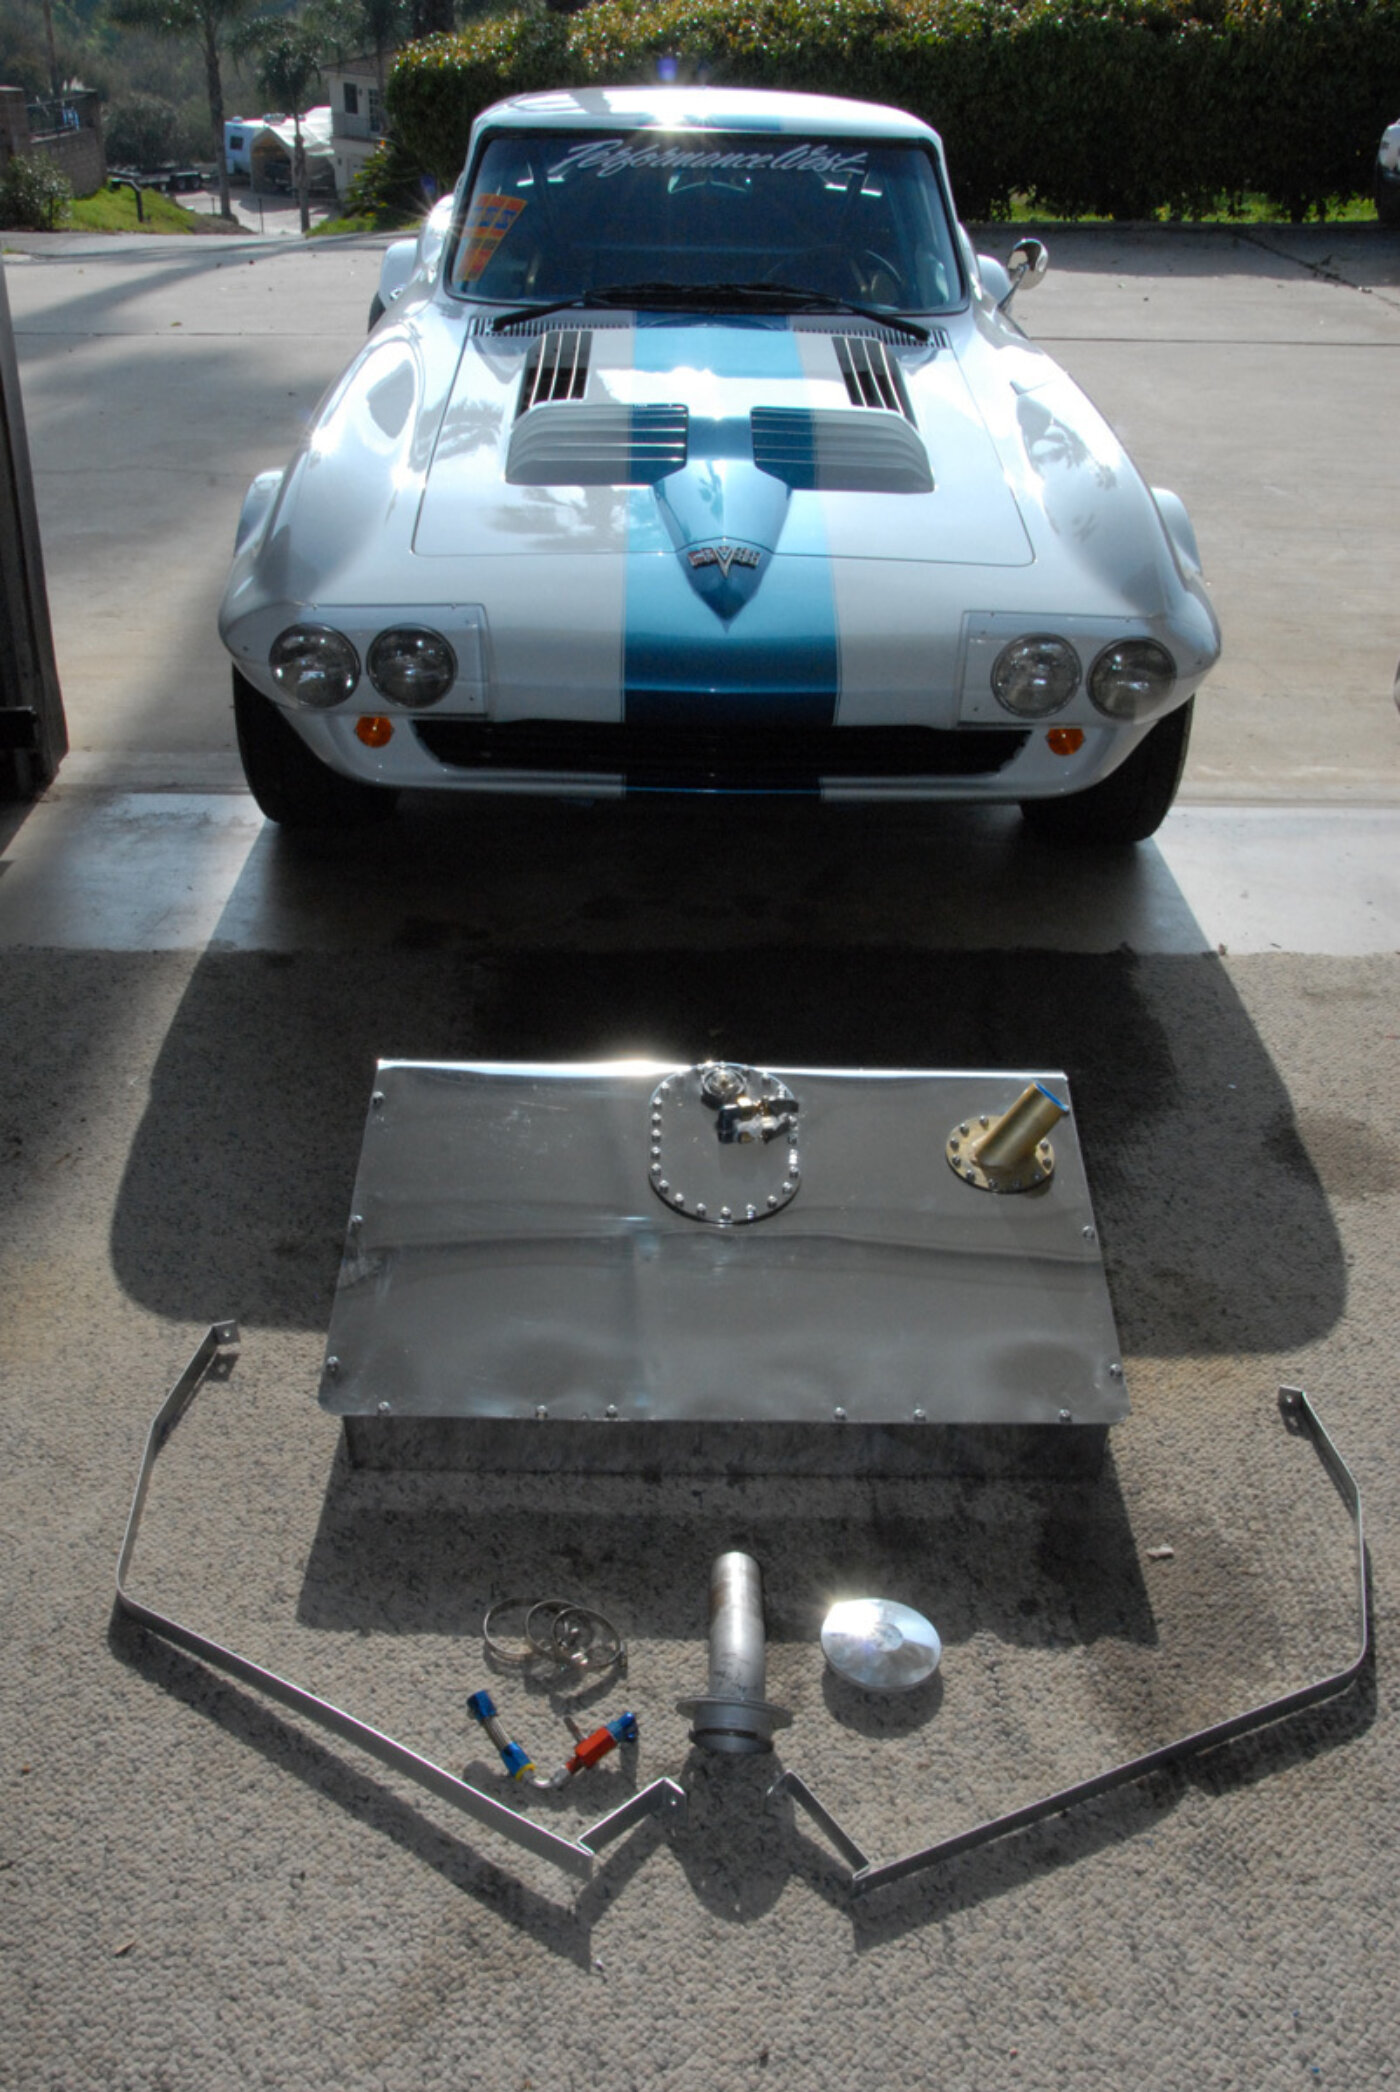 						Corvette Fuel Cell Installation 1
			